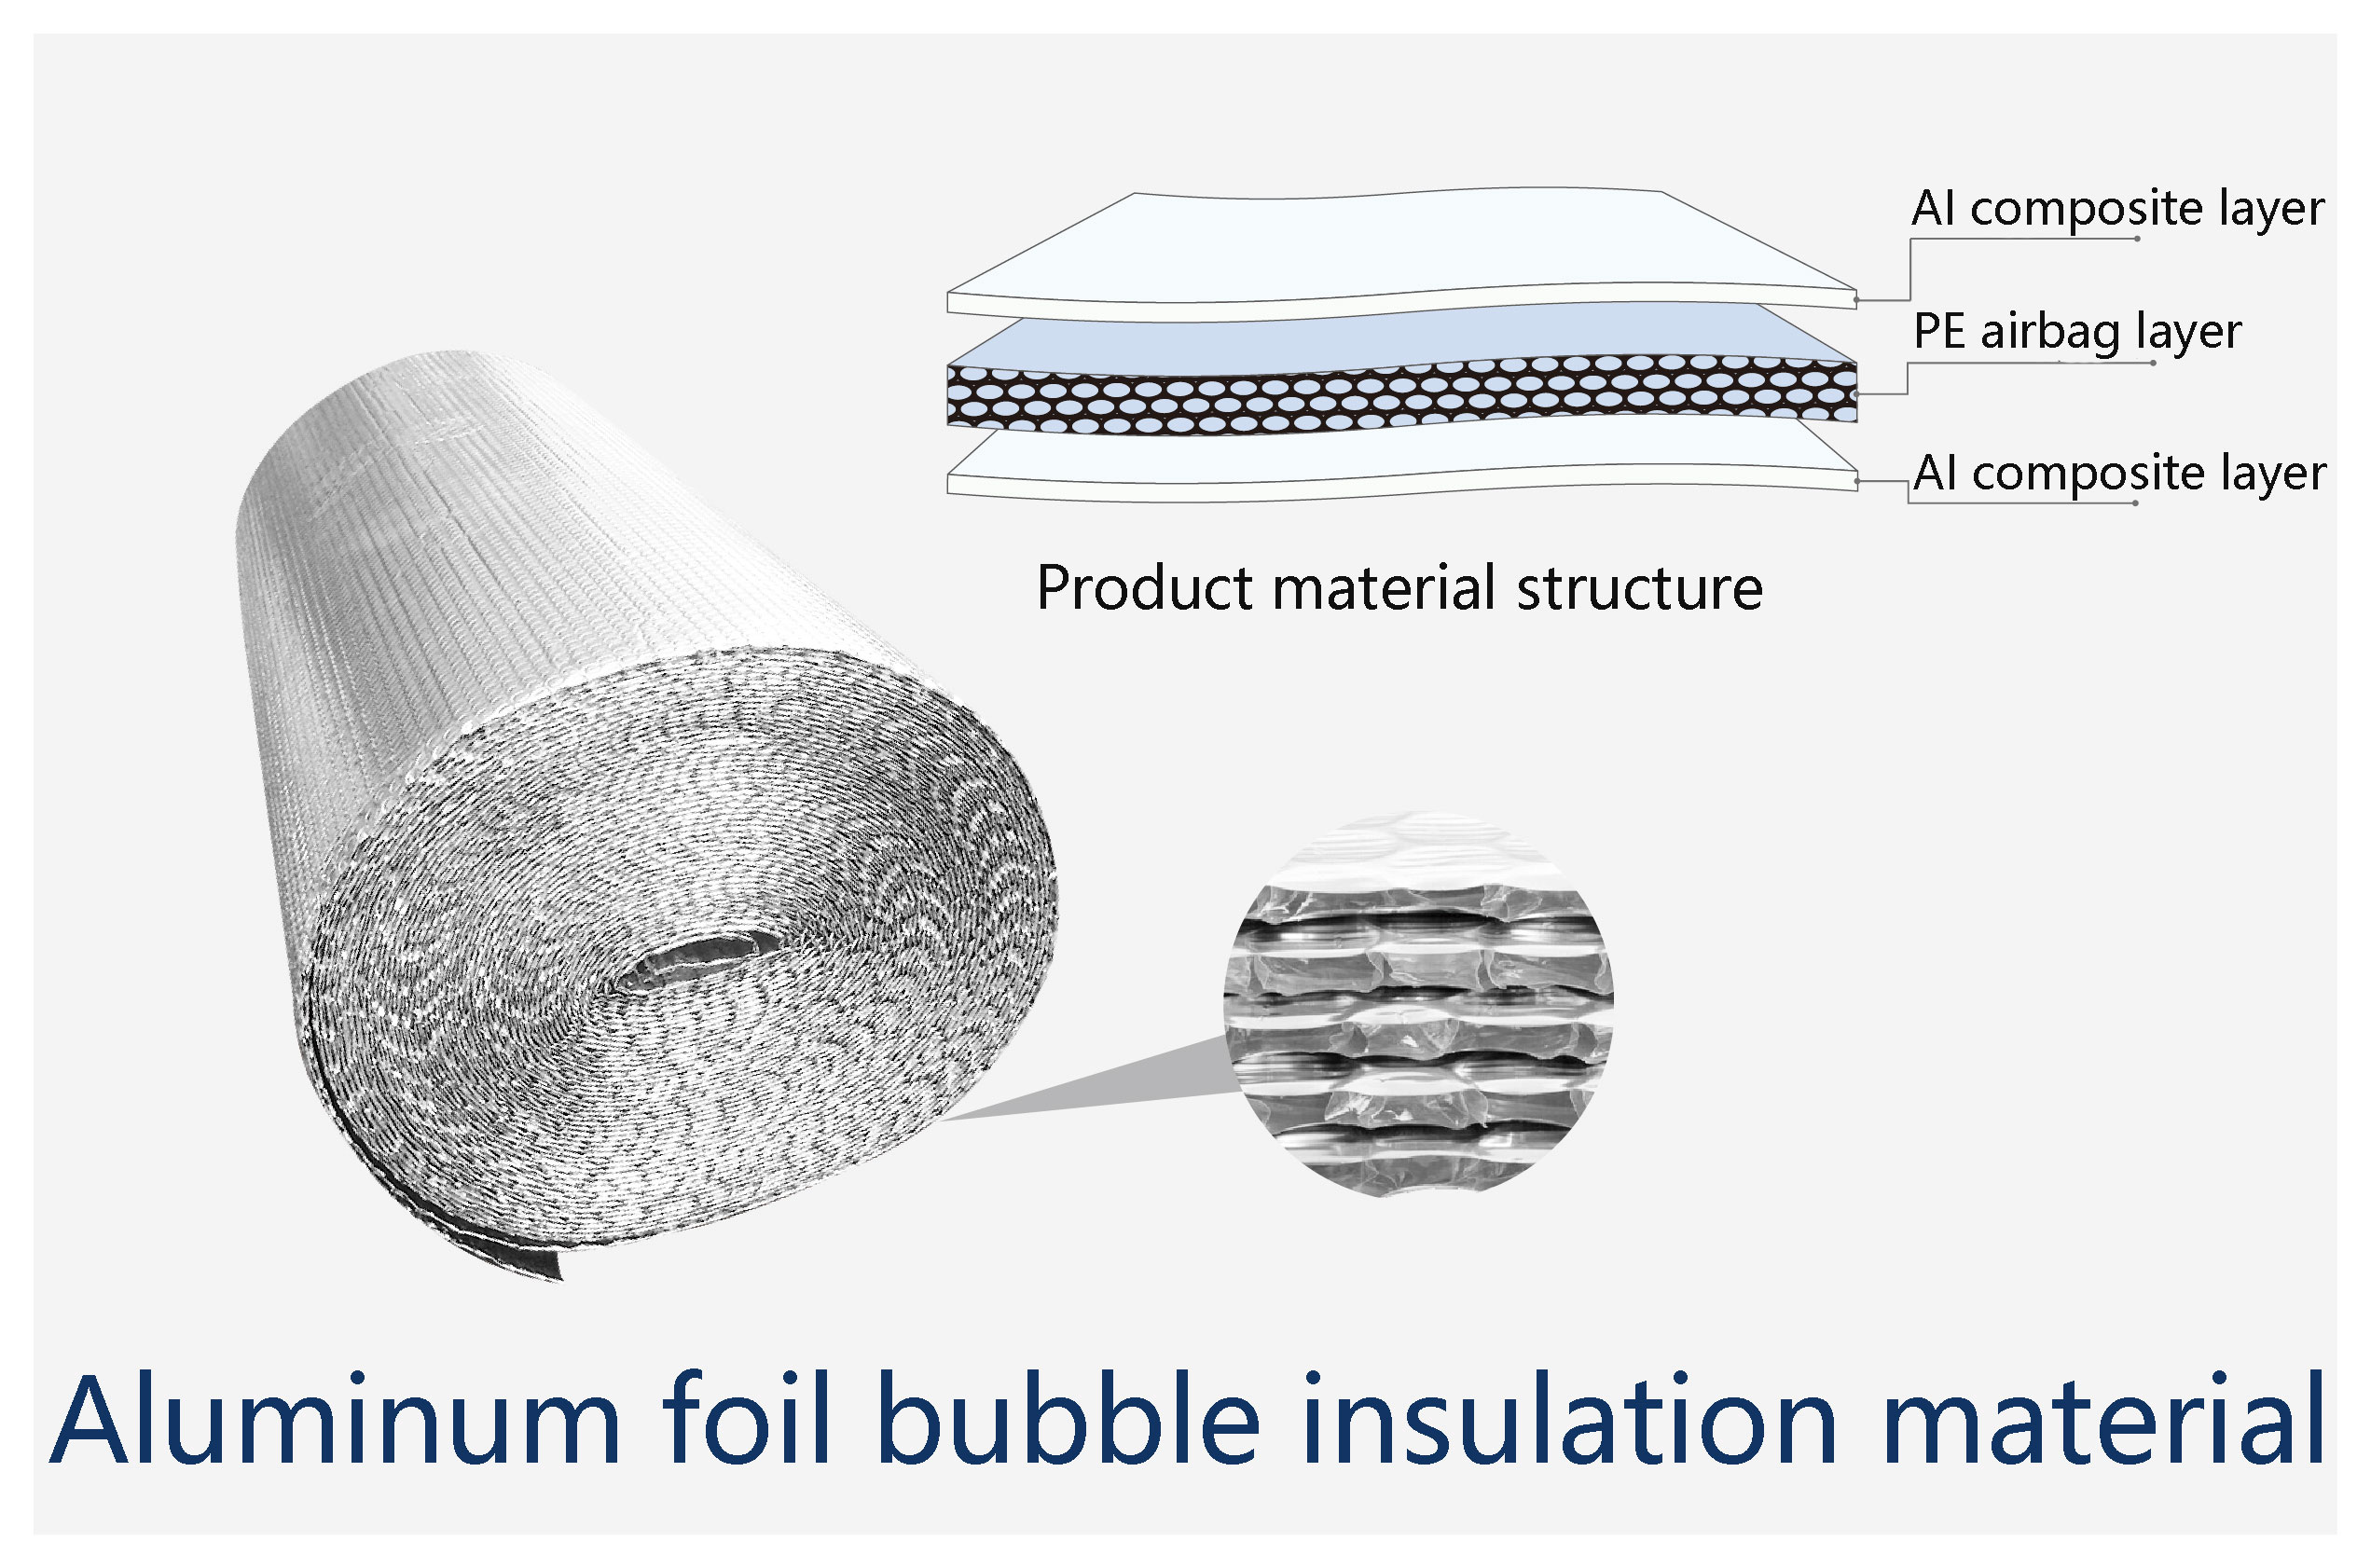 Aluminum foil bubble insulation material